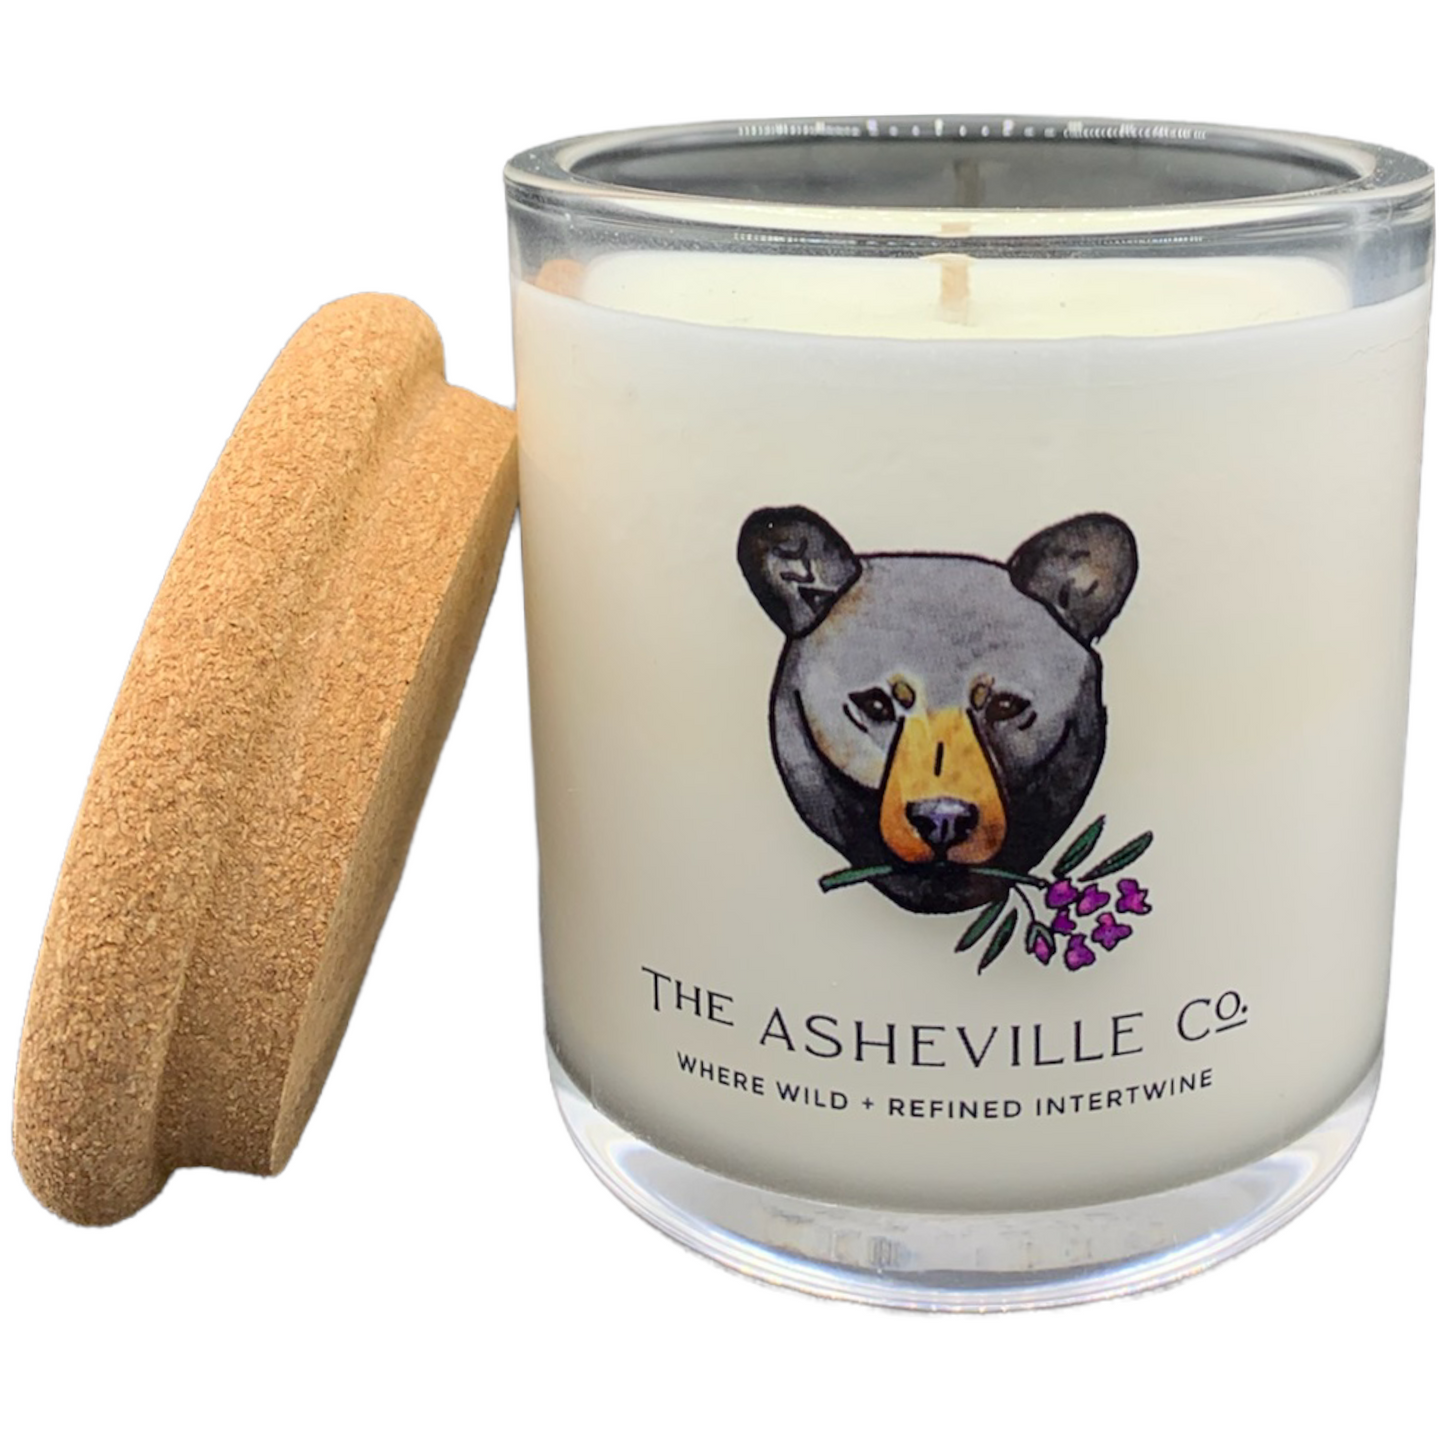 The ASHEVILLE Co. Candle No. 818 - The ASHEVILLE Co. TM